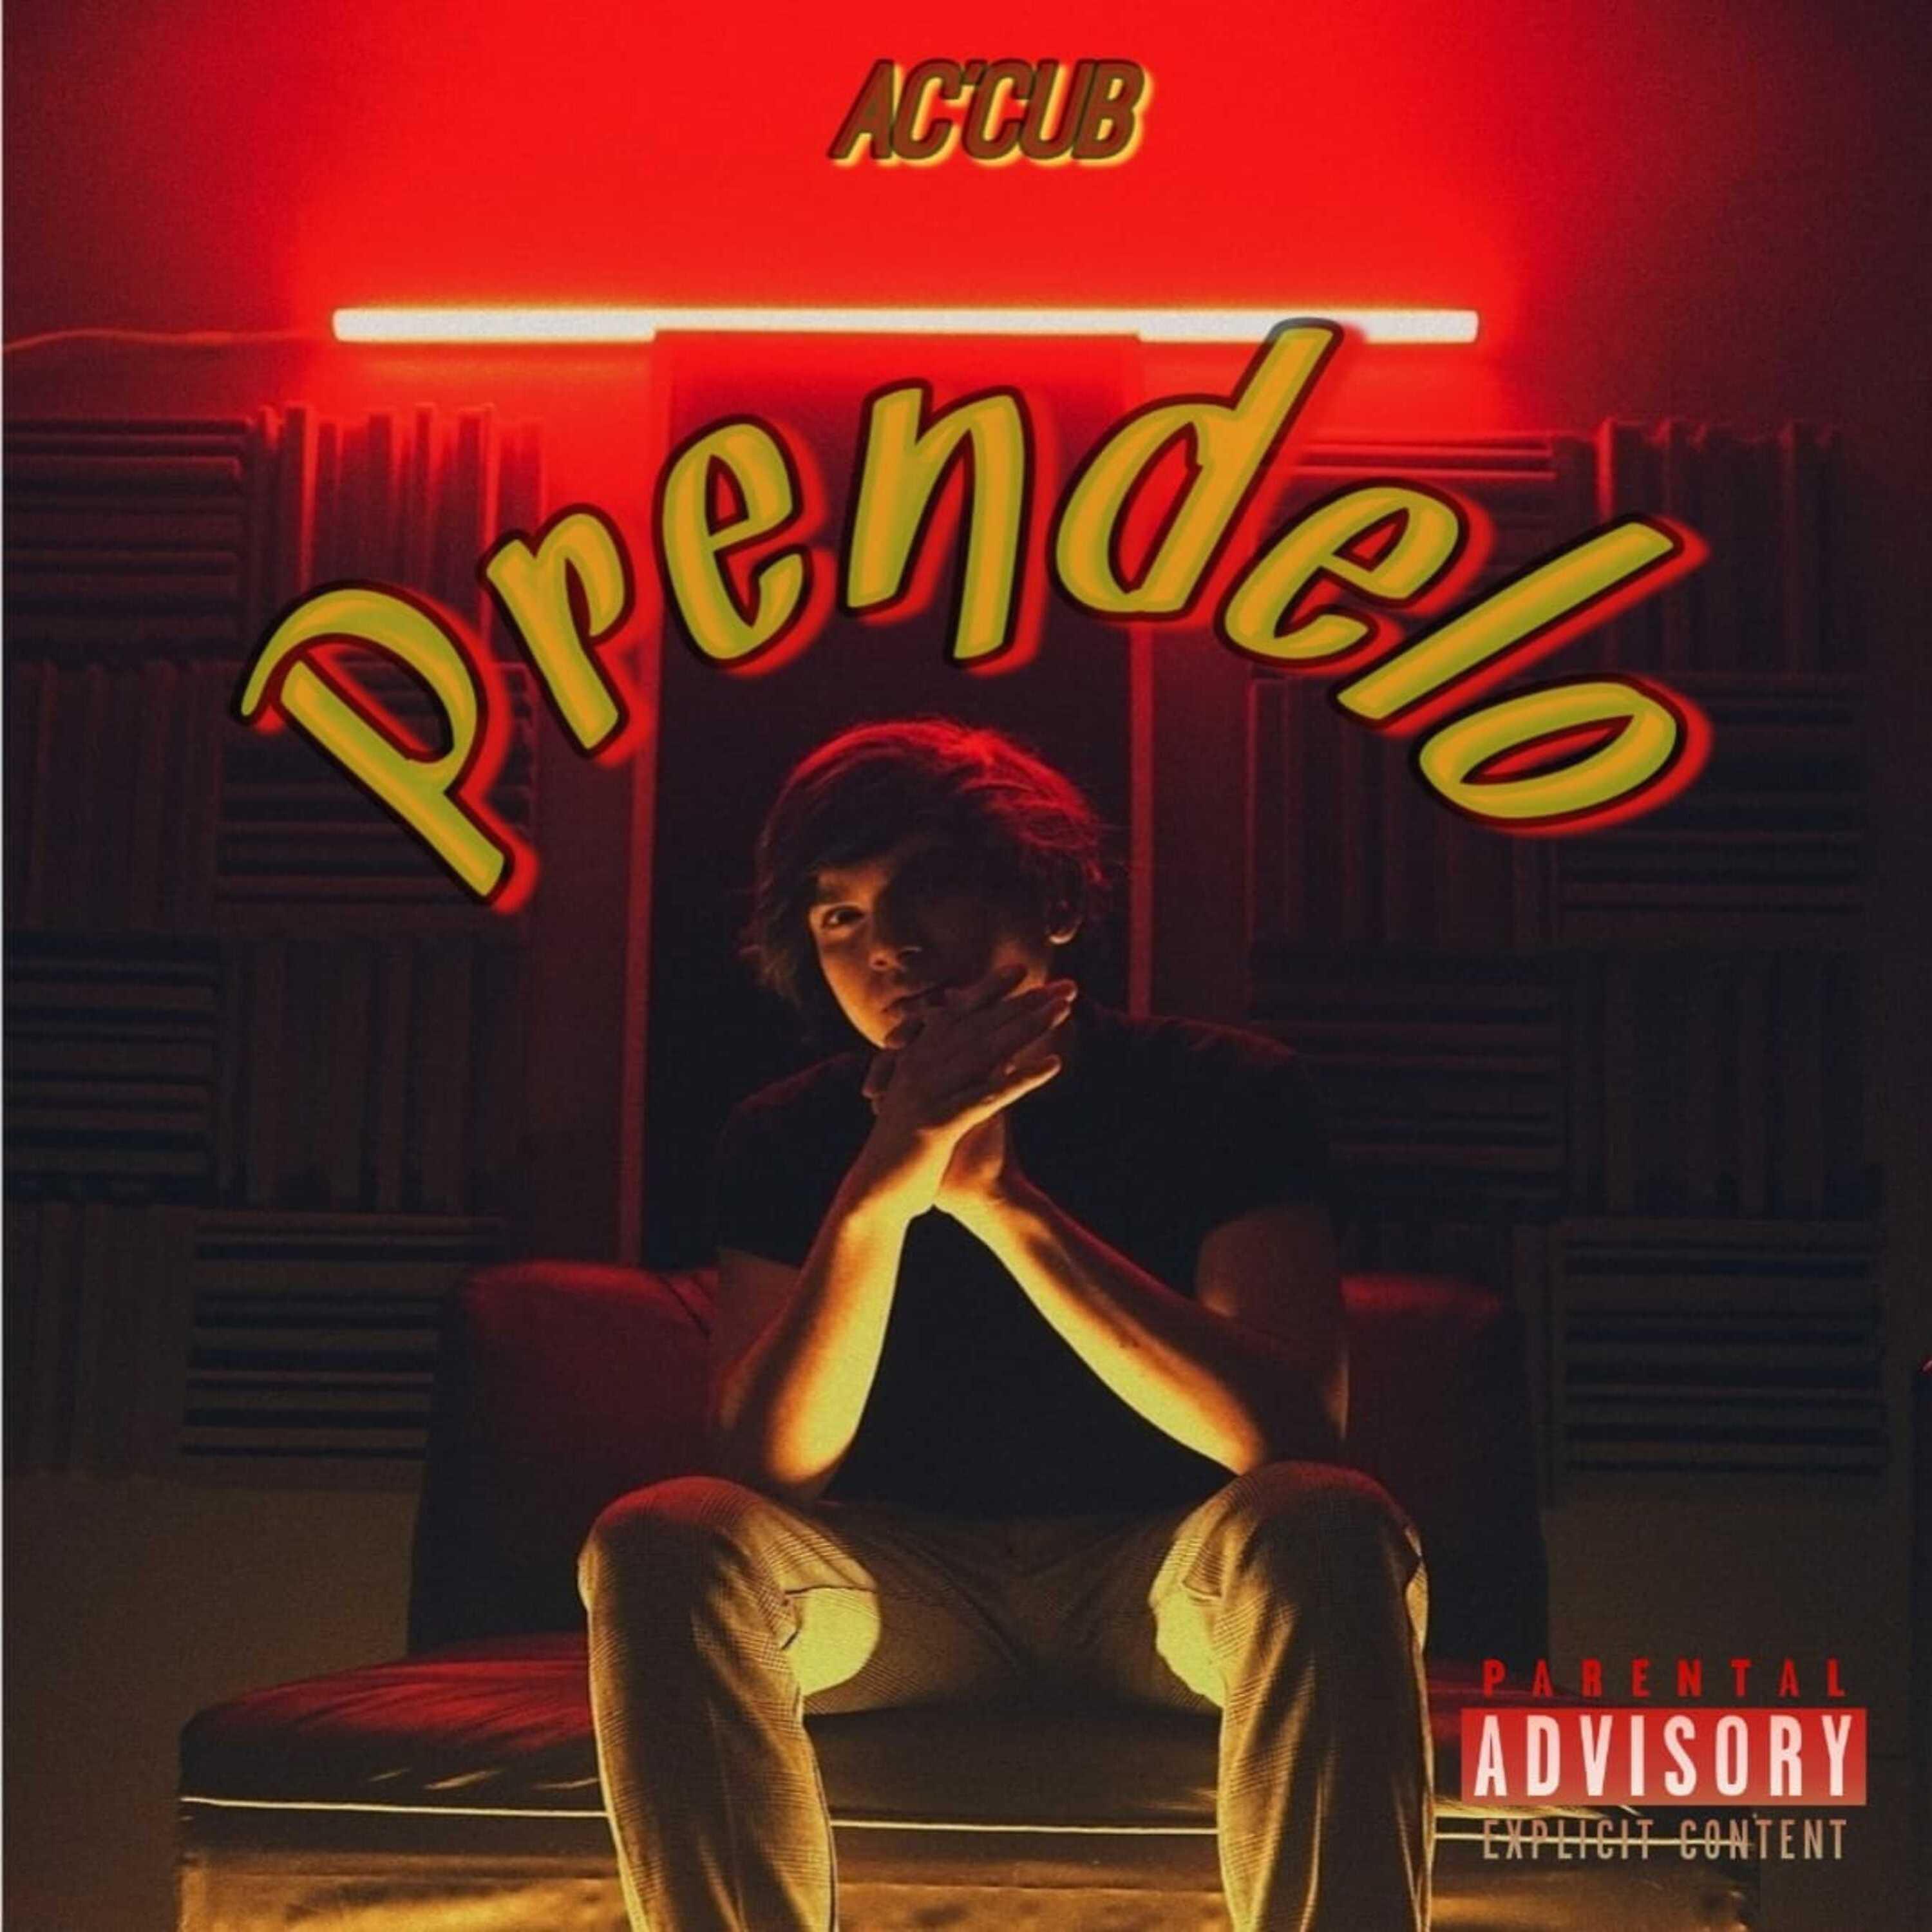 Постер альбома Prendelo